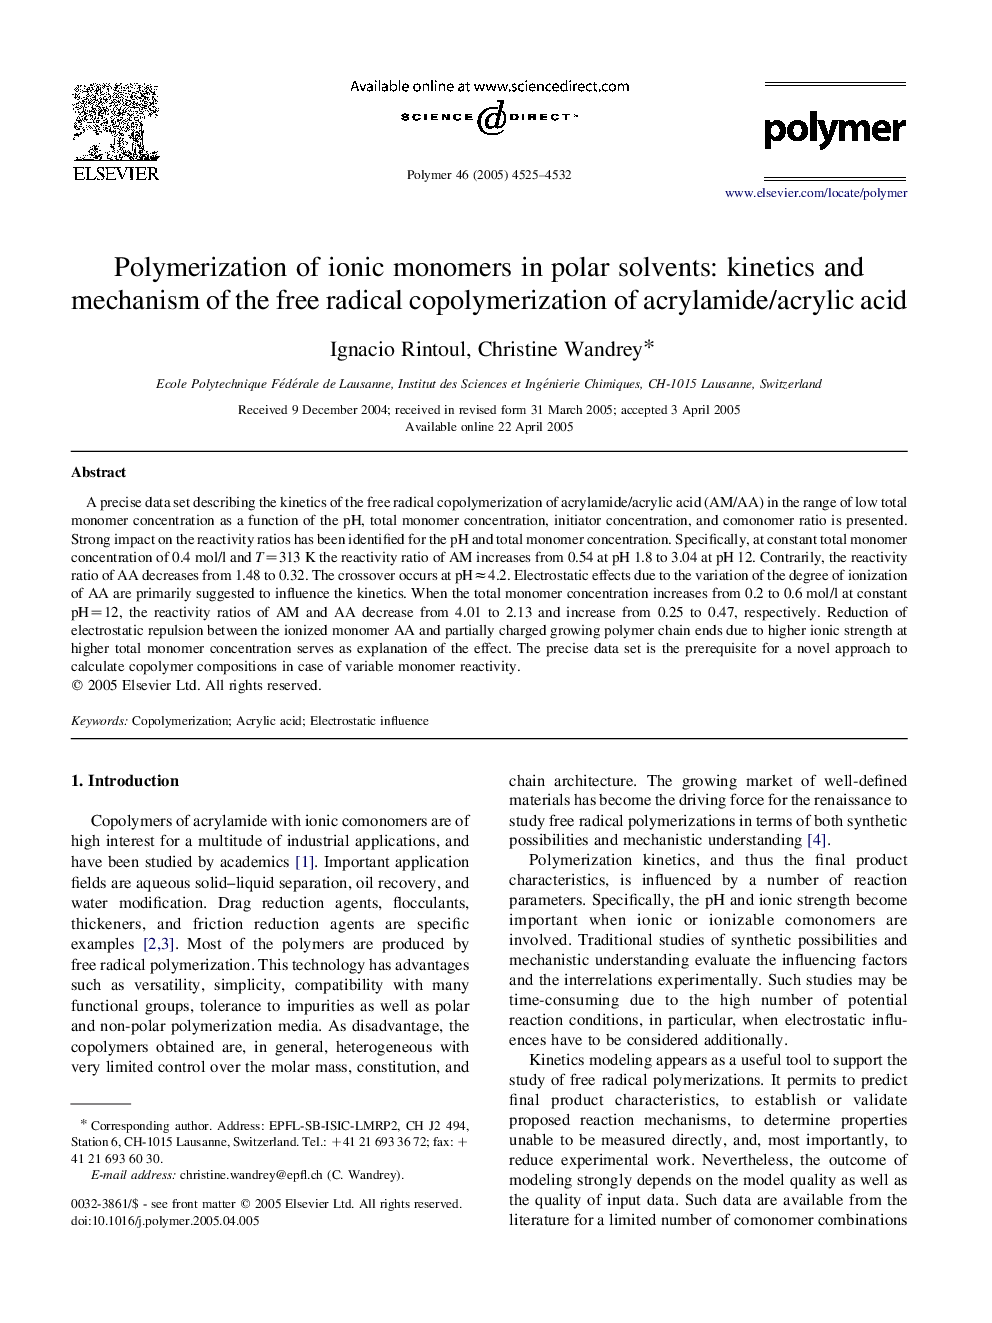 Polymerization of ionic monomers in polar solvents: kinetics and mechanism of the free radical copolymerization of acrylamide/acrylic acid